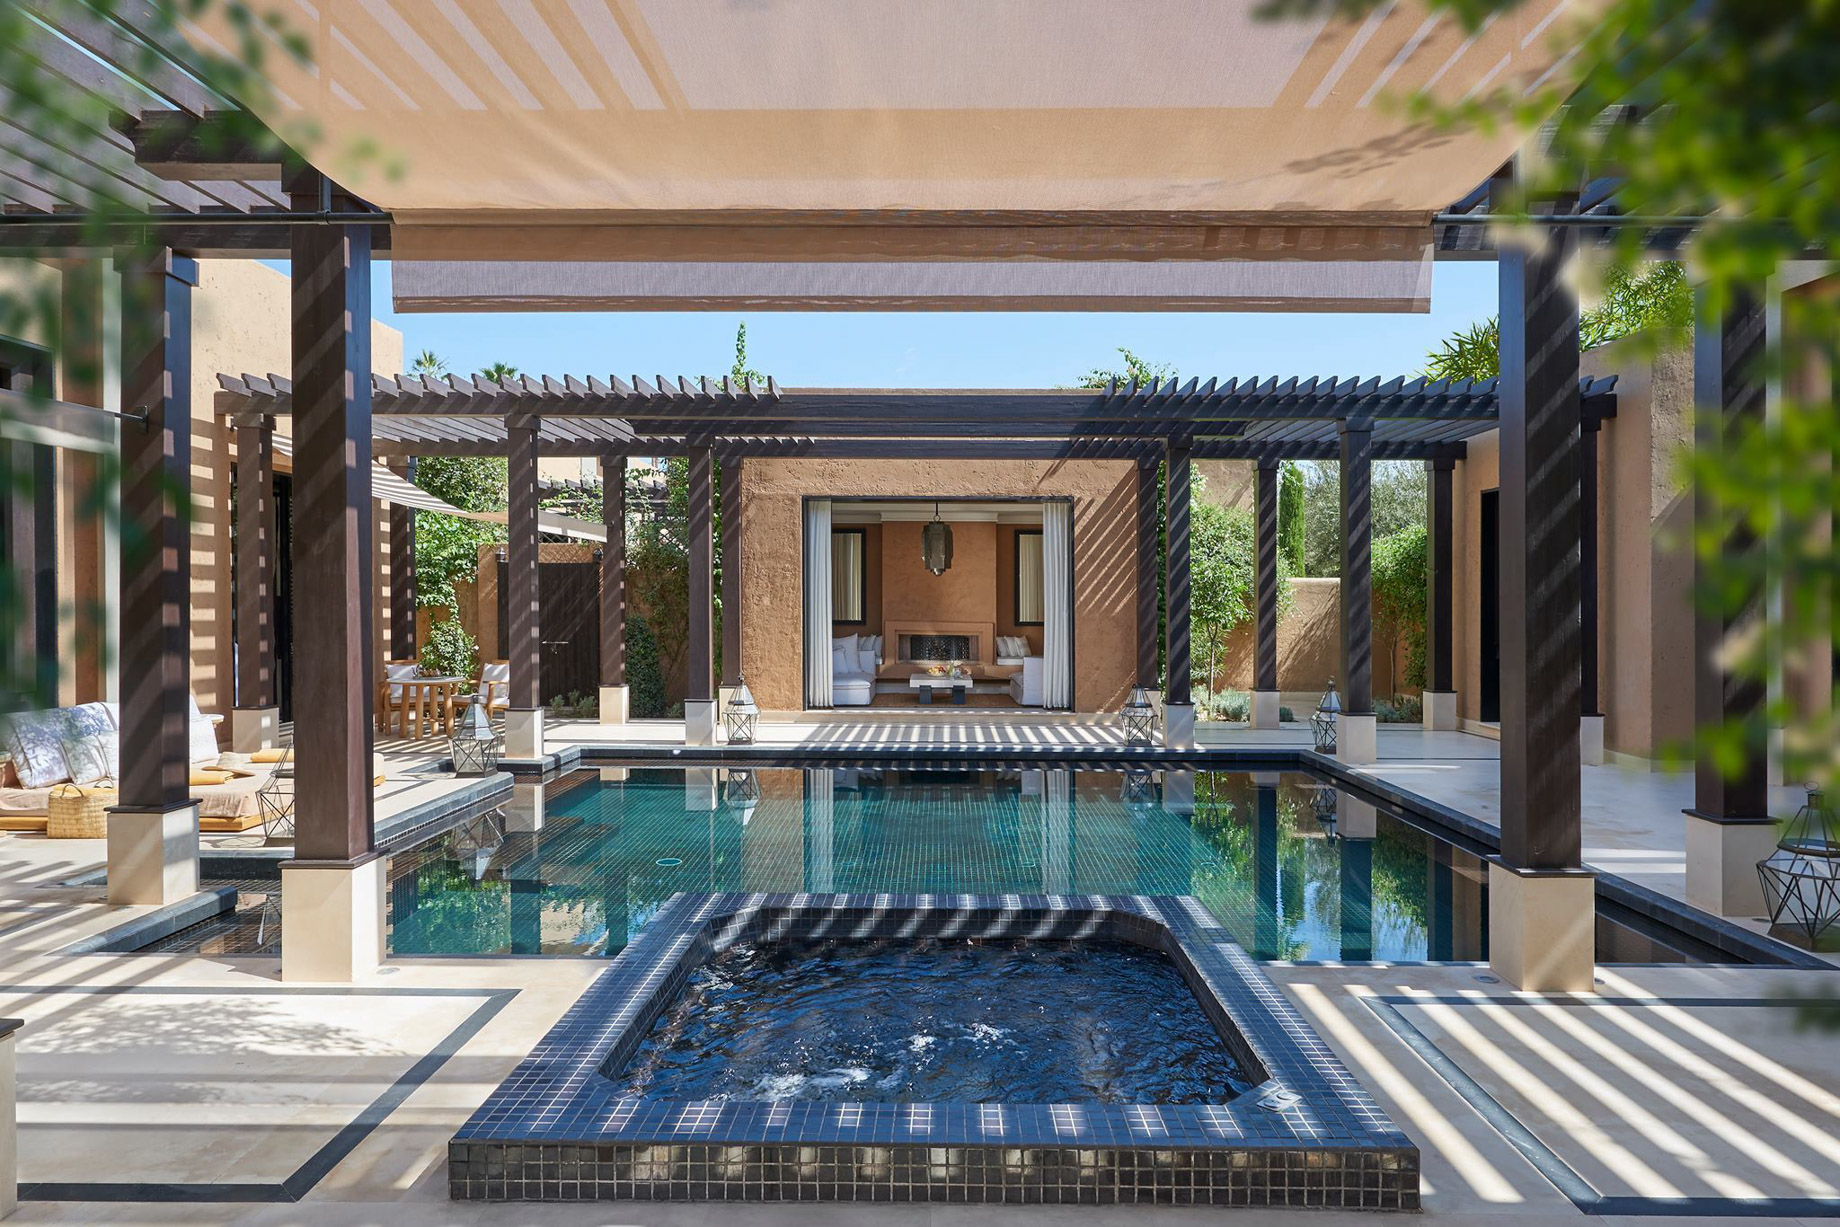 Mandarin Oriental, Marrakech Hotel - Marrakech, Morocco - Villa Pool Deck